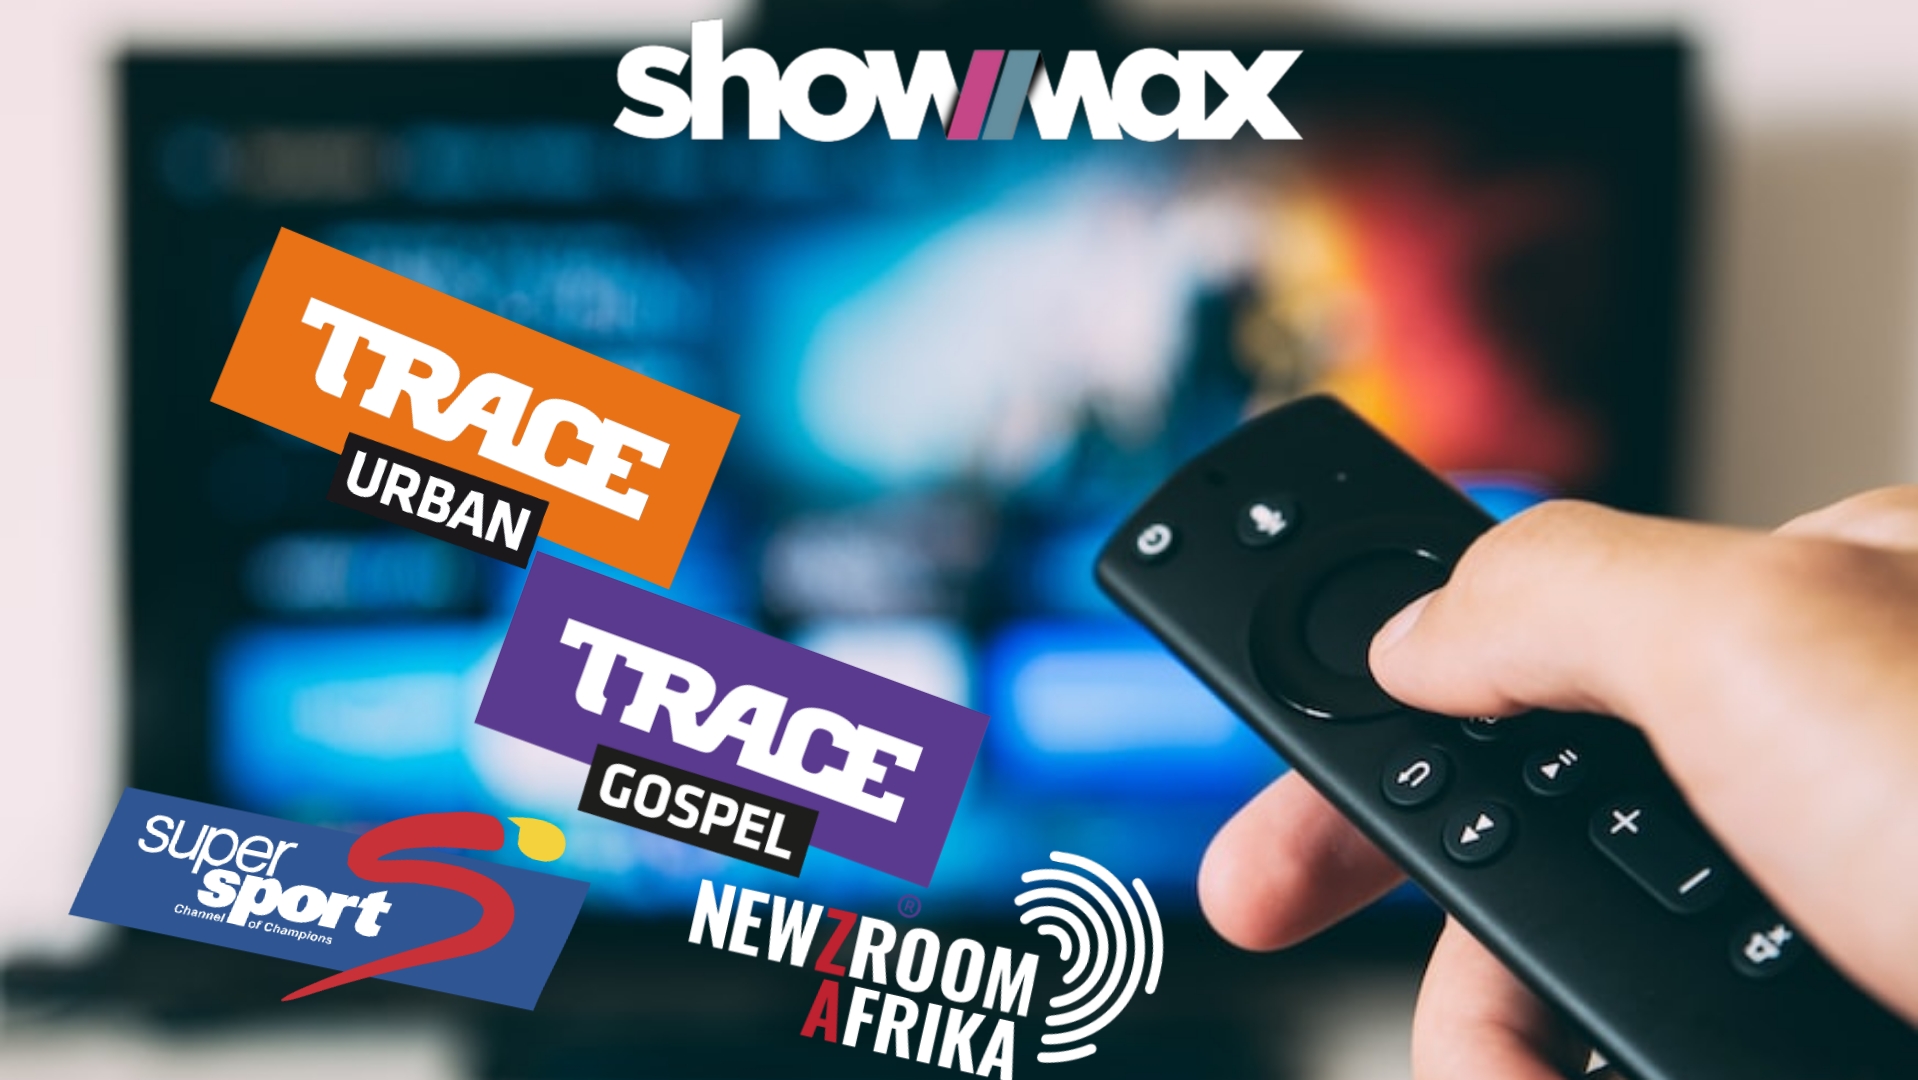 Showmax Pro channеl list